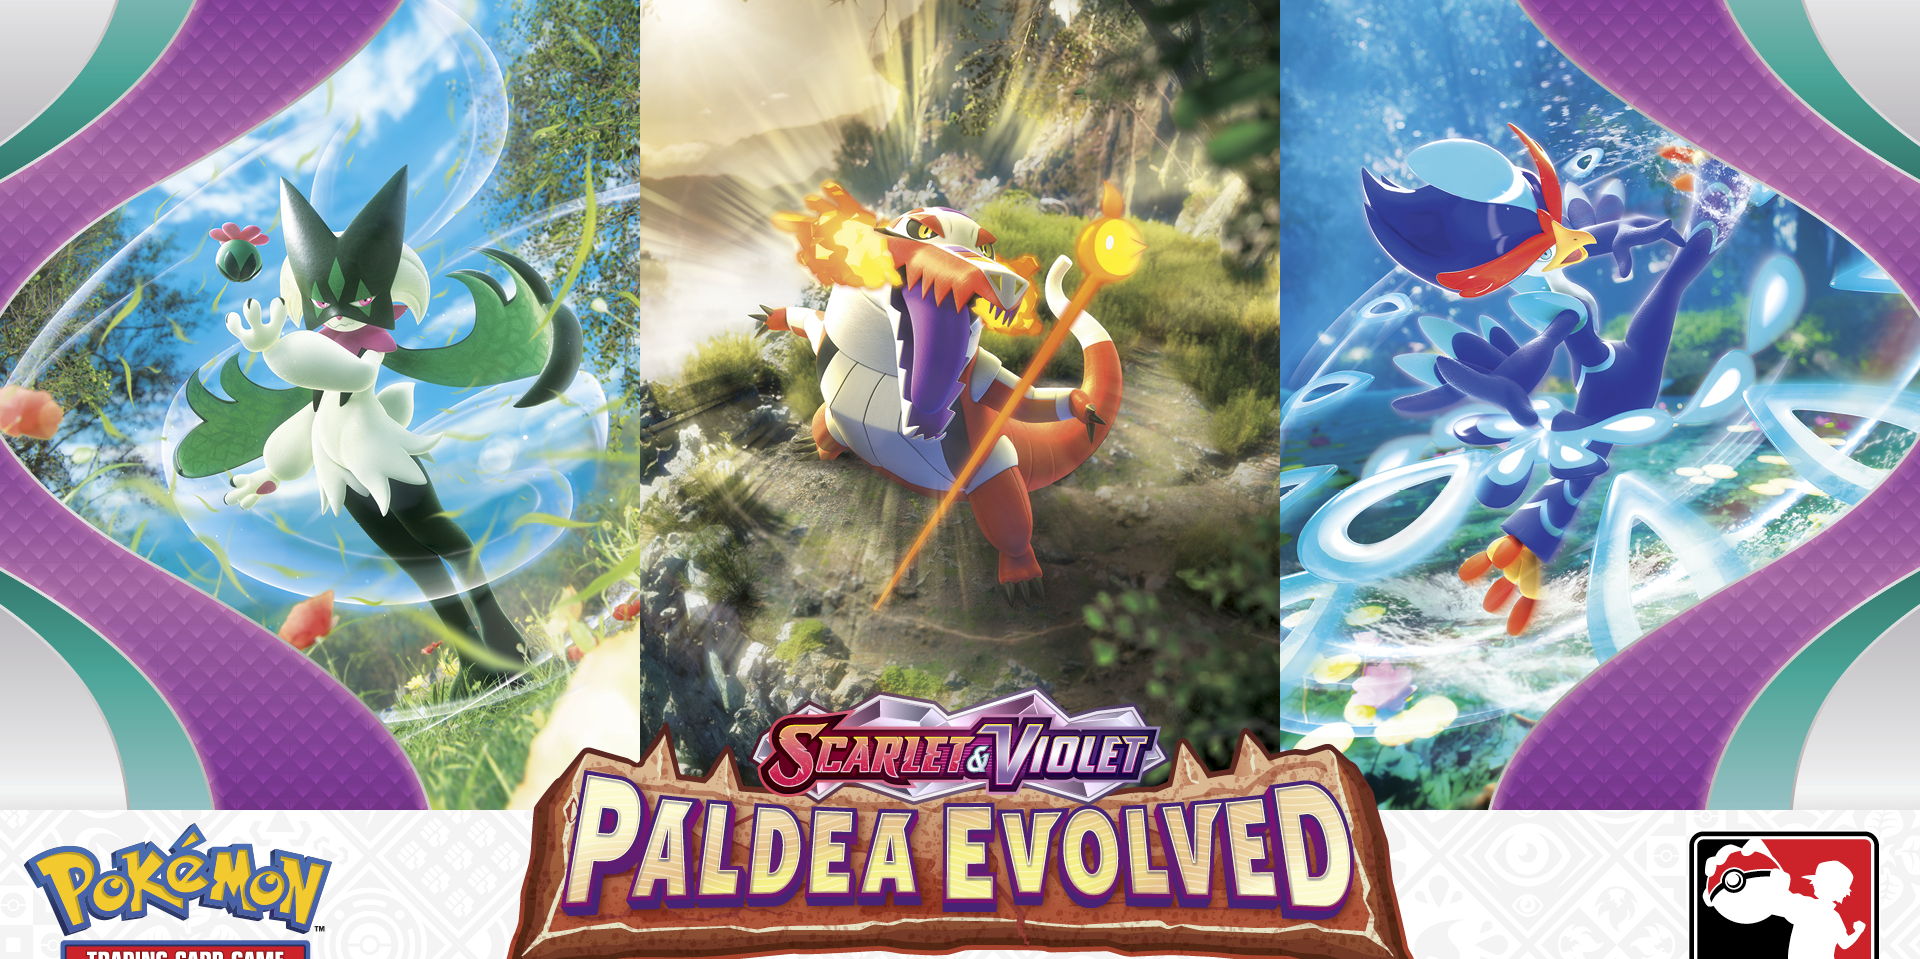 Pokemon Paldea Evolved Prerelease promotional image